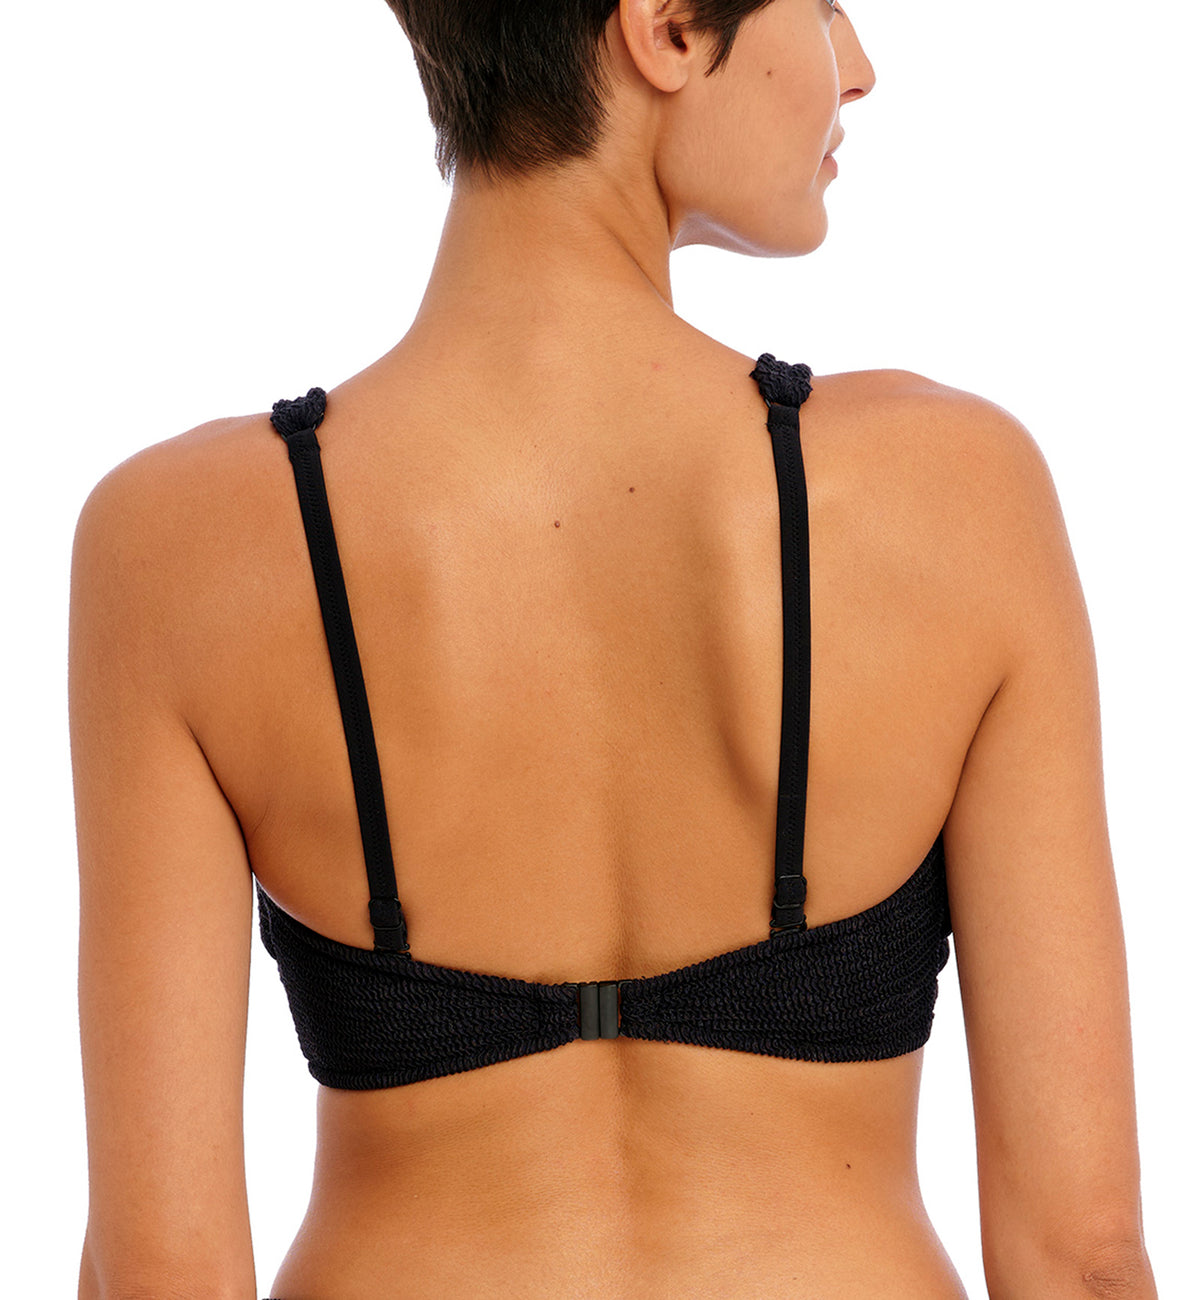 Freya Ibiza Waves Convertible Underwire Bralette Bikini Top (203814),30D,Black - Black,30D